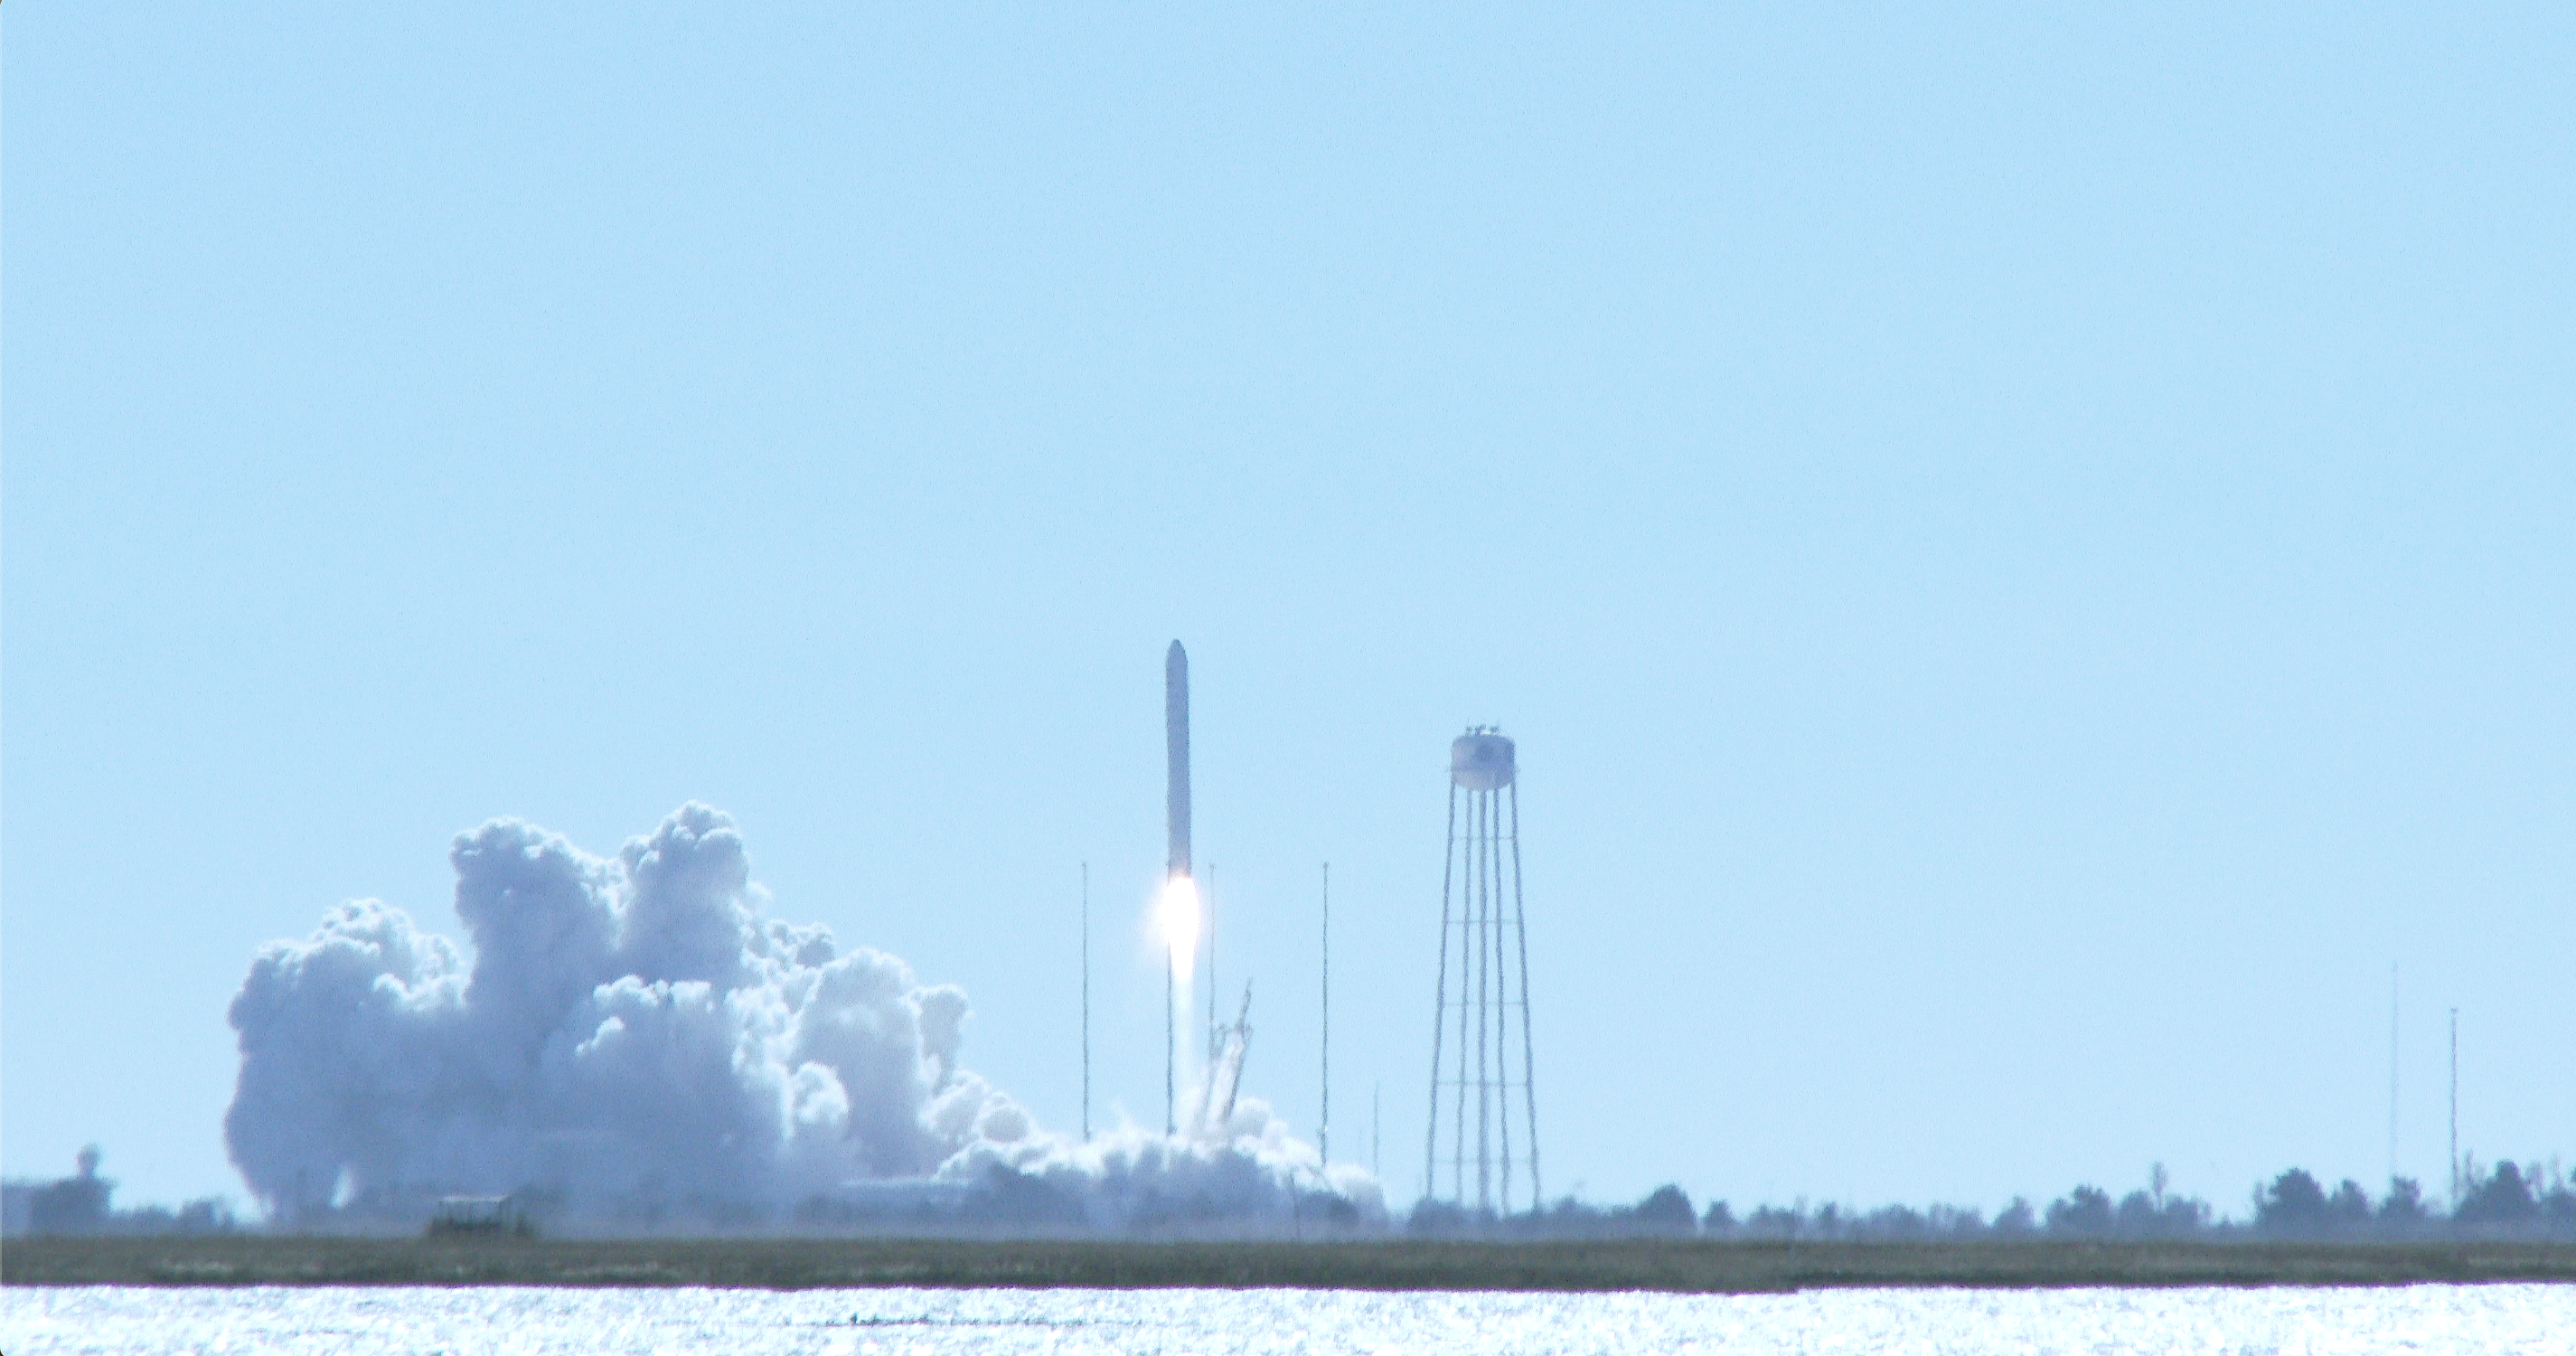 orthrop Grumman's Antares230+ rocket flew to the ISS on Saturday, Feb. 19, 2022, from the Mid-Atlantic Regional Spaceport's Pad-0A at NASA's Wallops Flight Facility on Wallops Island, Virginia